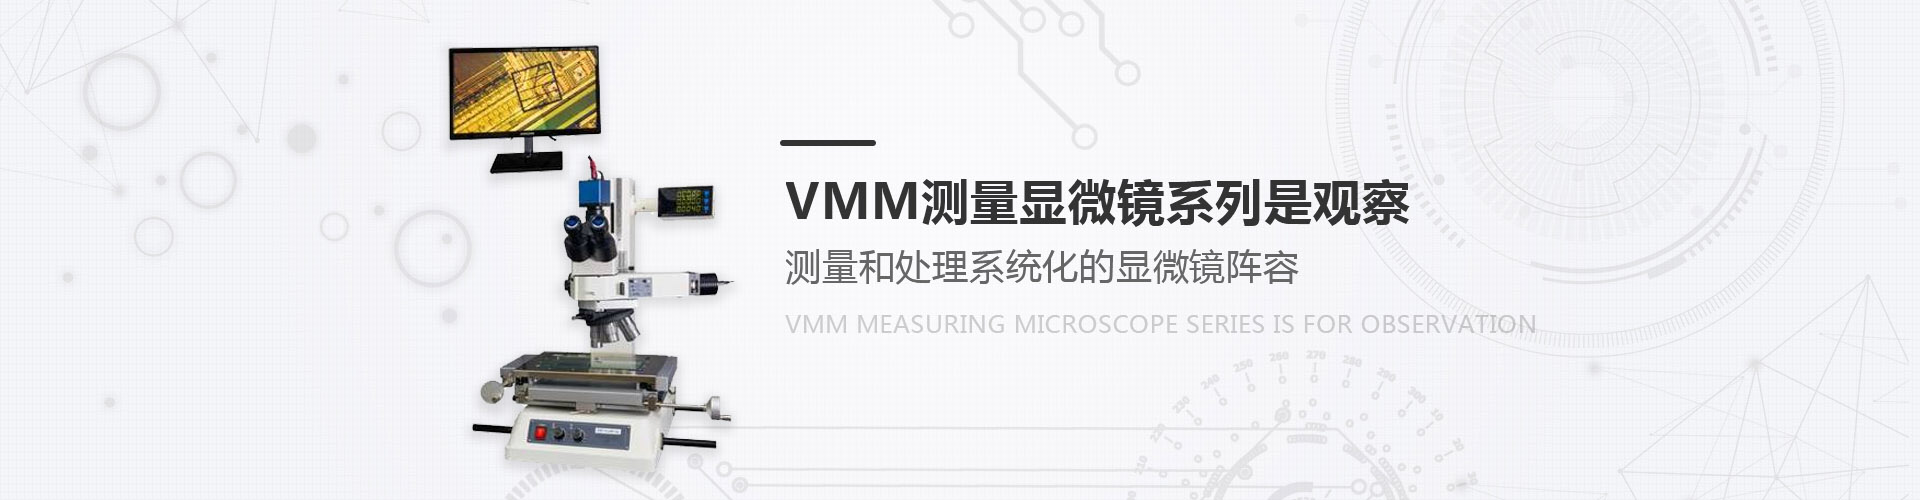 VMM測量顯微鏡